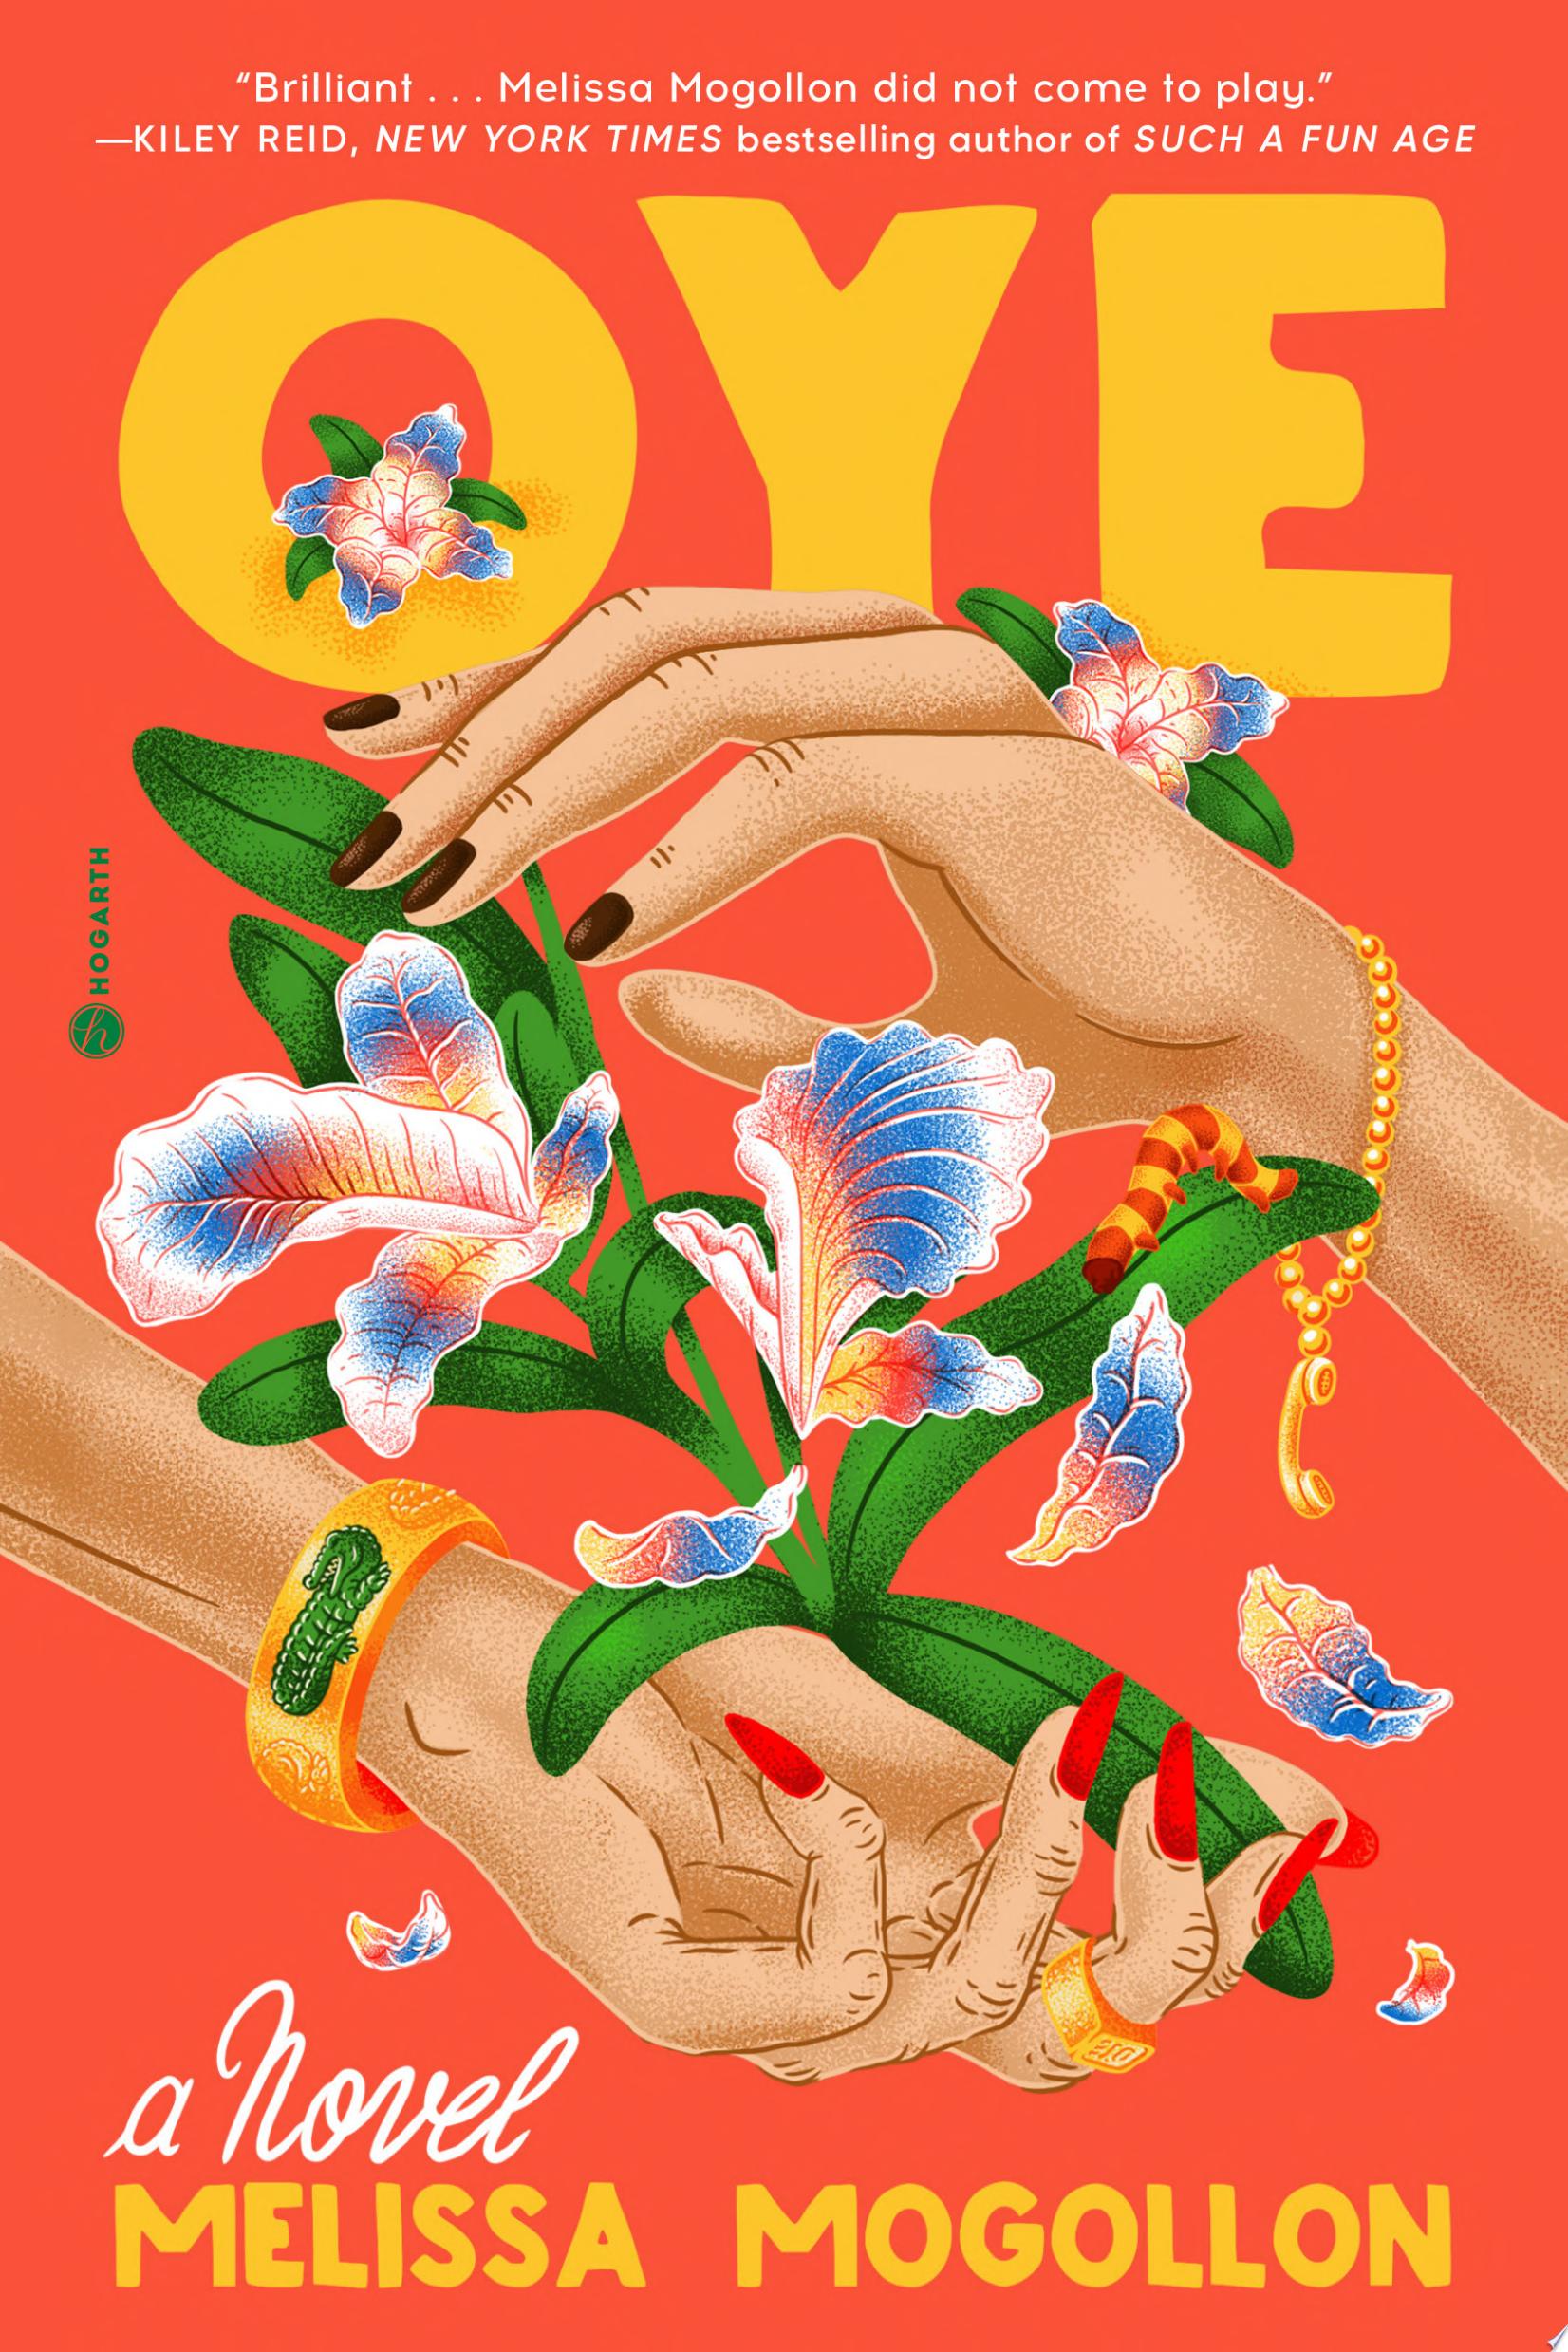 Image for "Oye" by Melissa Mogollon